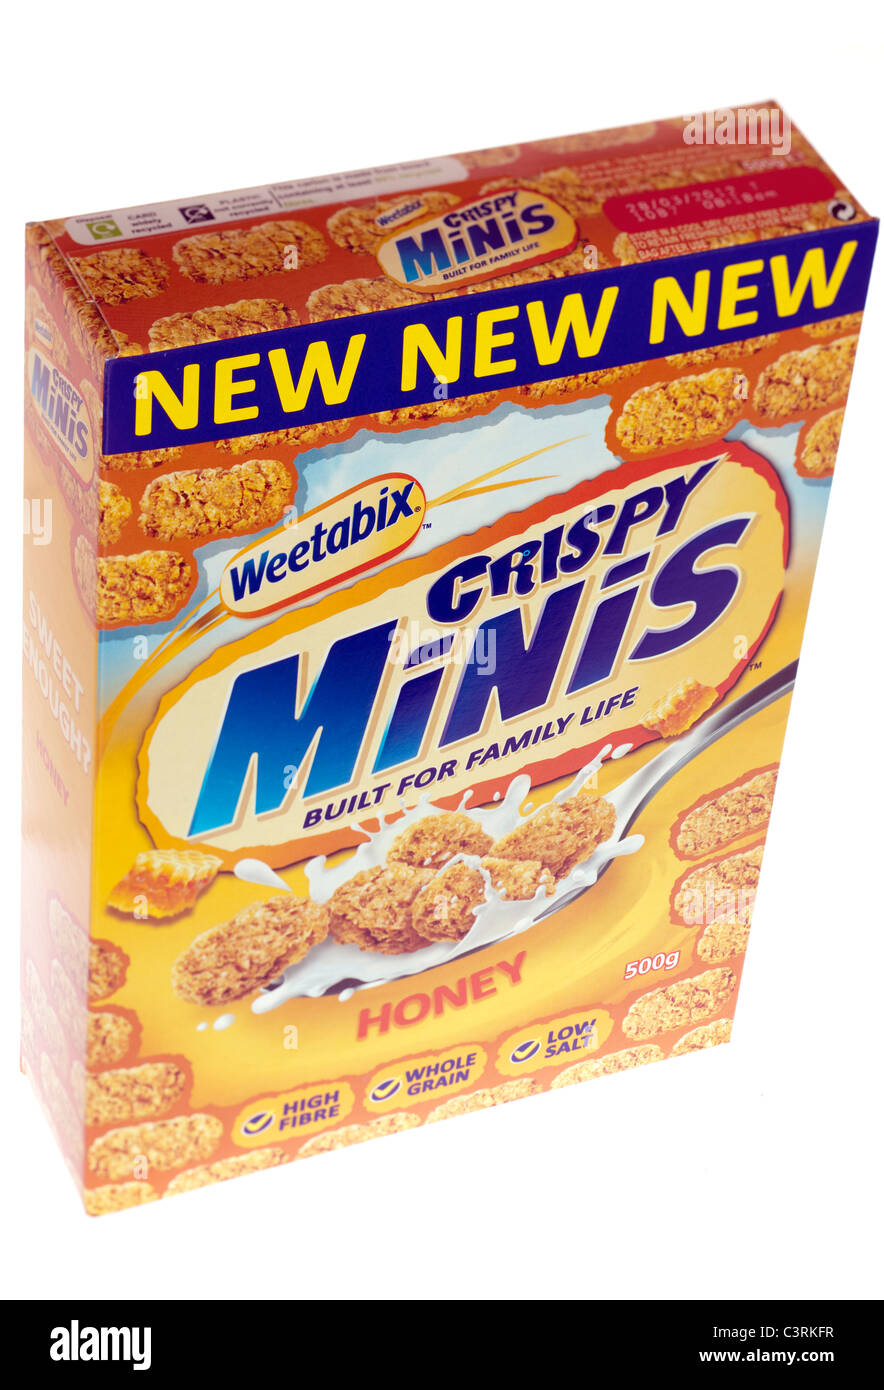 500 gram box of New Weetabix honey crispy minis breakfast cereal Stock Photo